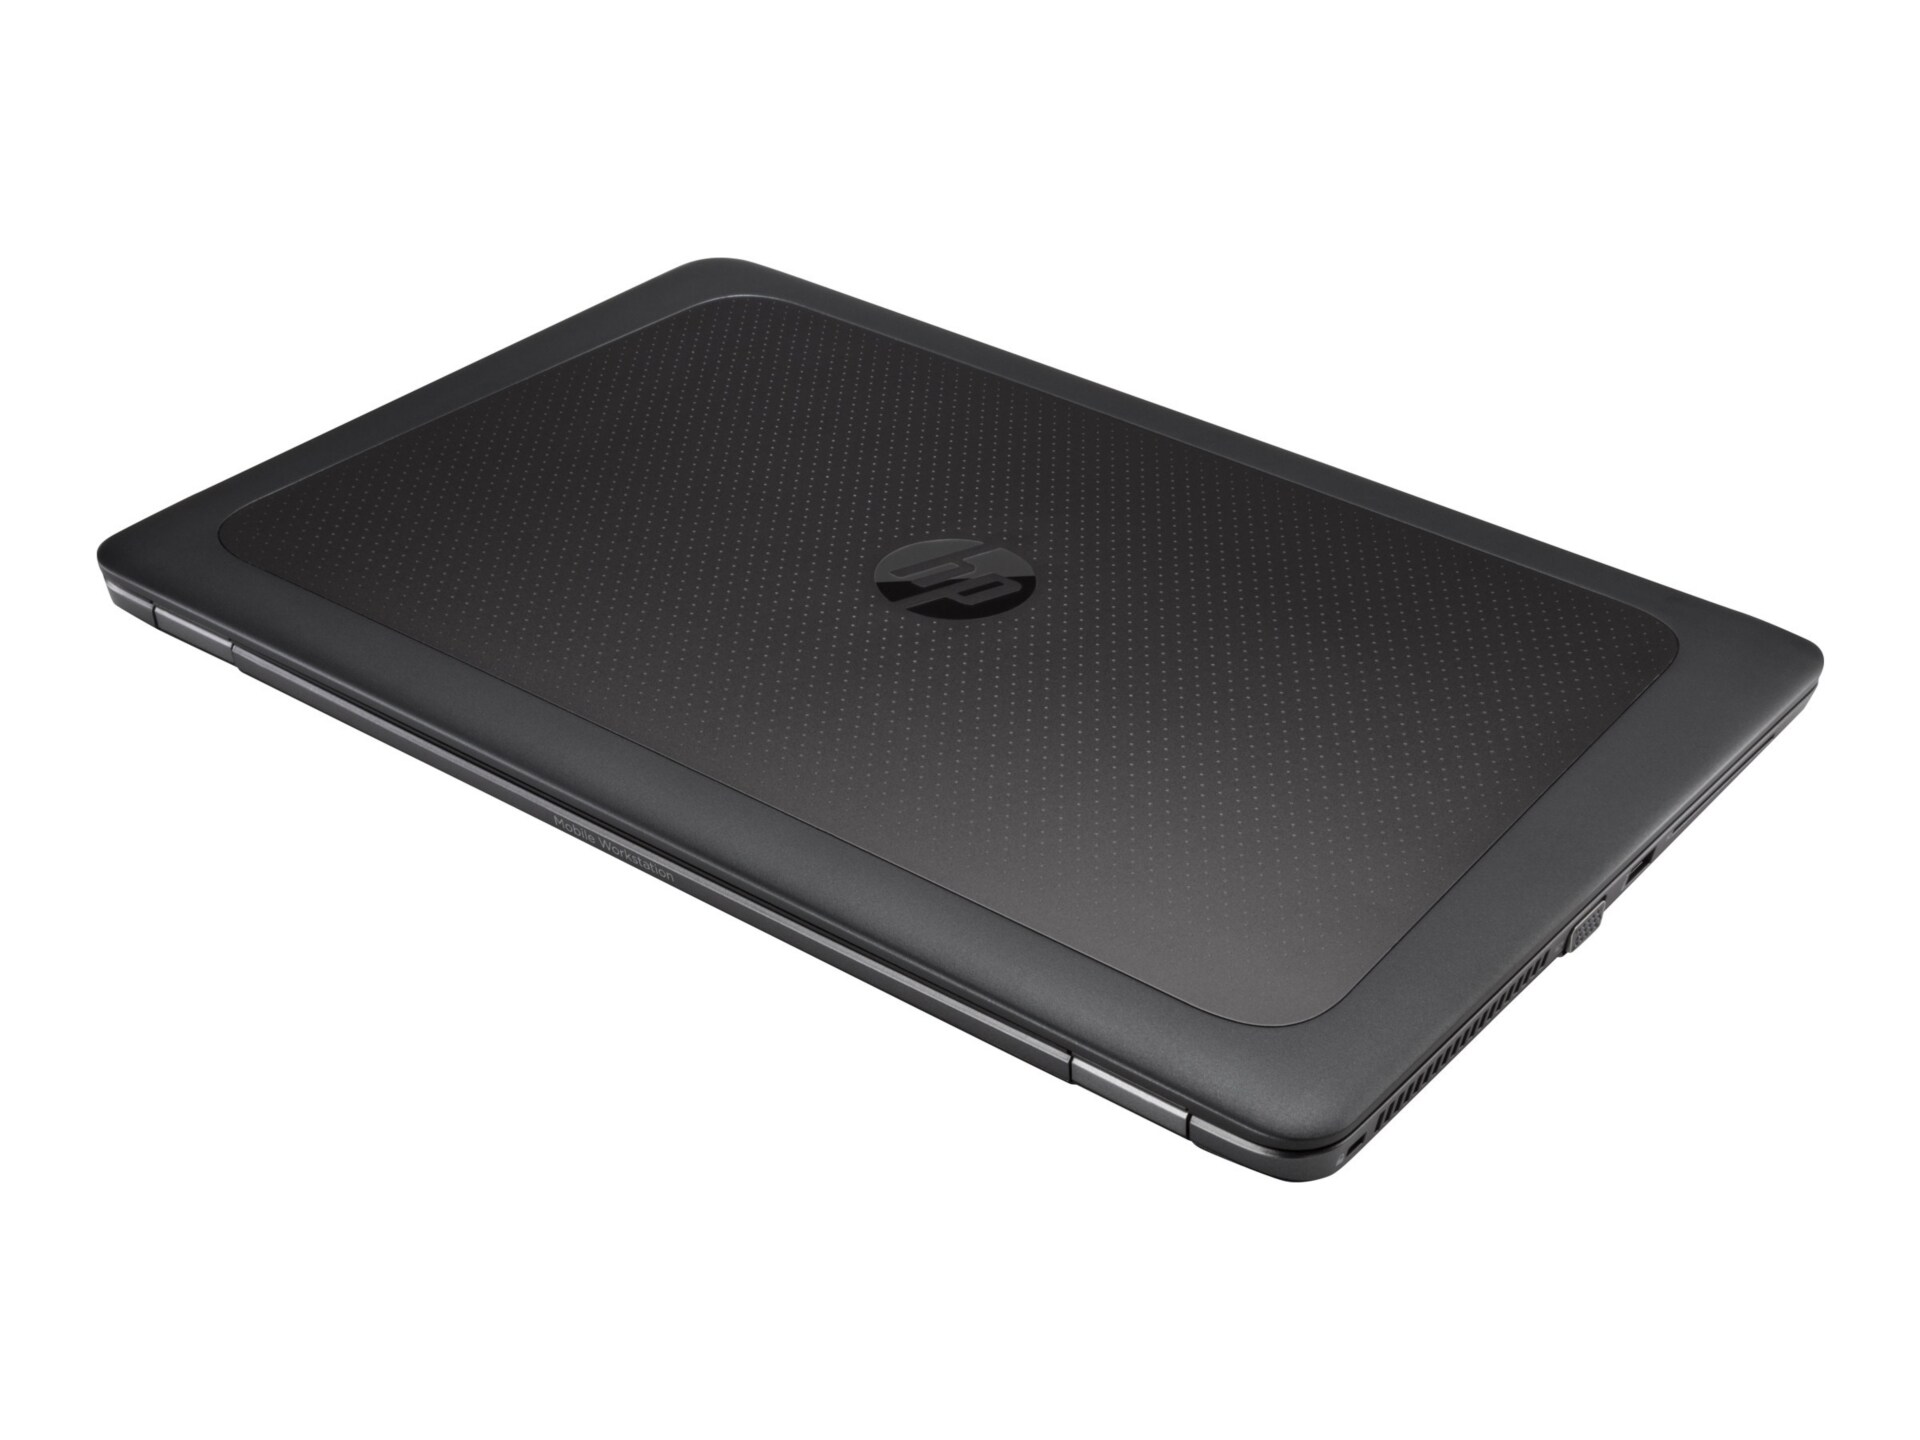 HP ZBook 15u G3 Mobile Workstation - 15.6" - Core i5 6200U - 8 GB RAM - 256 GB SSD - US